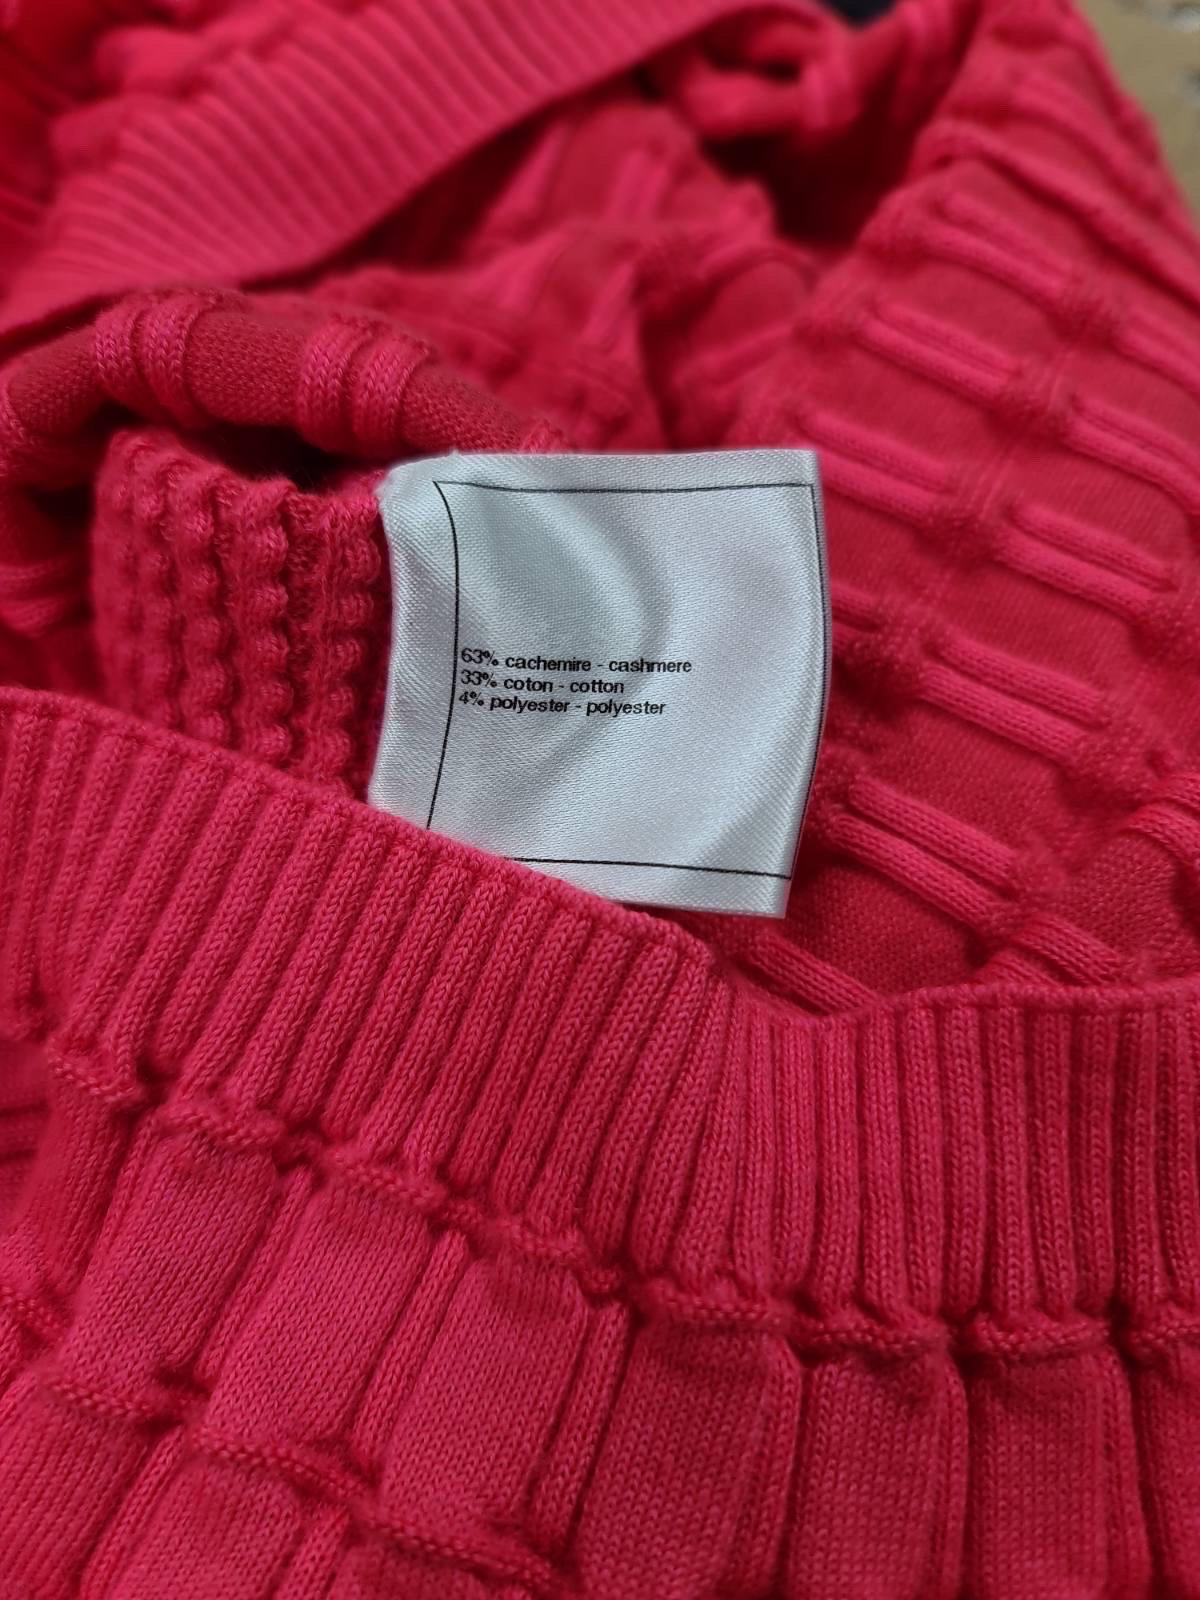 Rose Chanel - Mini robe rose foncé en vente